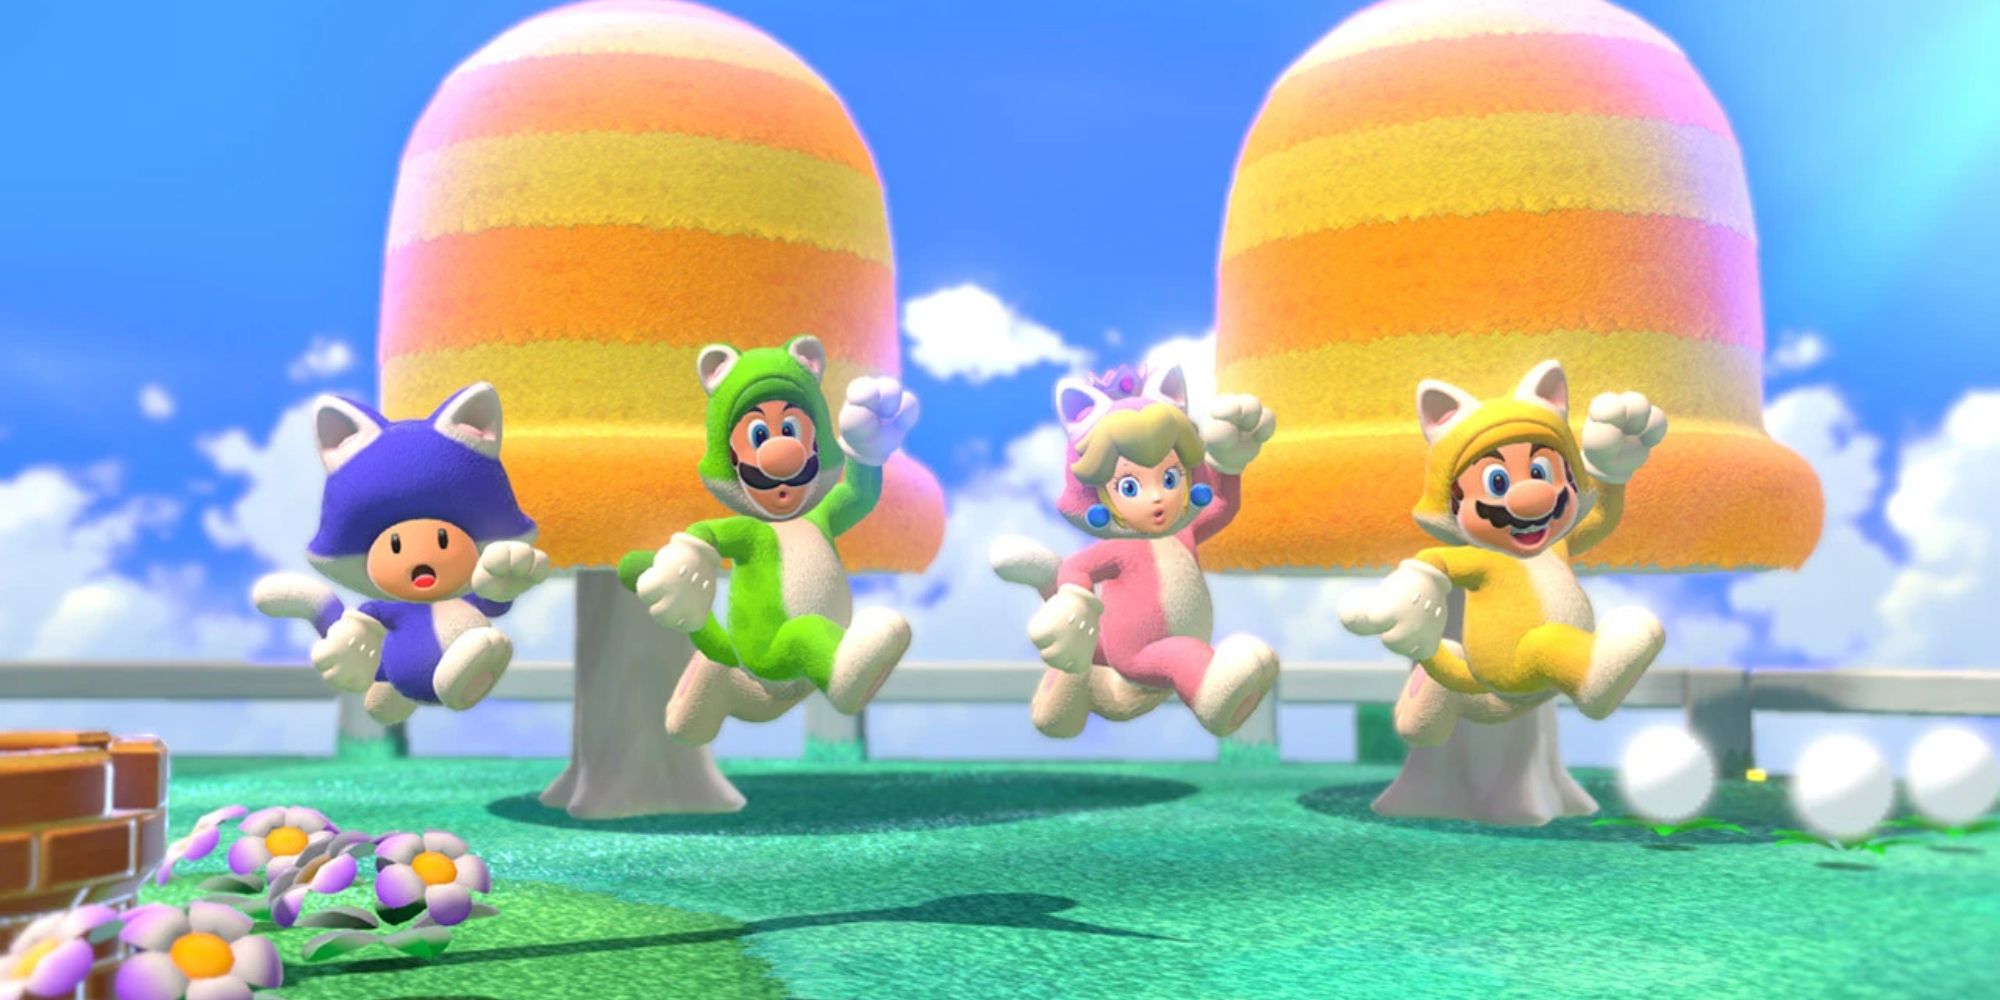 Toad, Luigi, Peach, and Mario jumping in cat suits